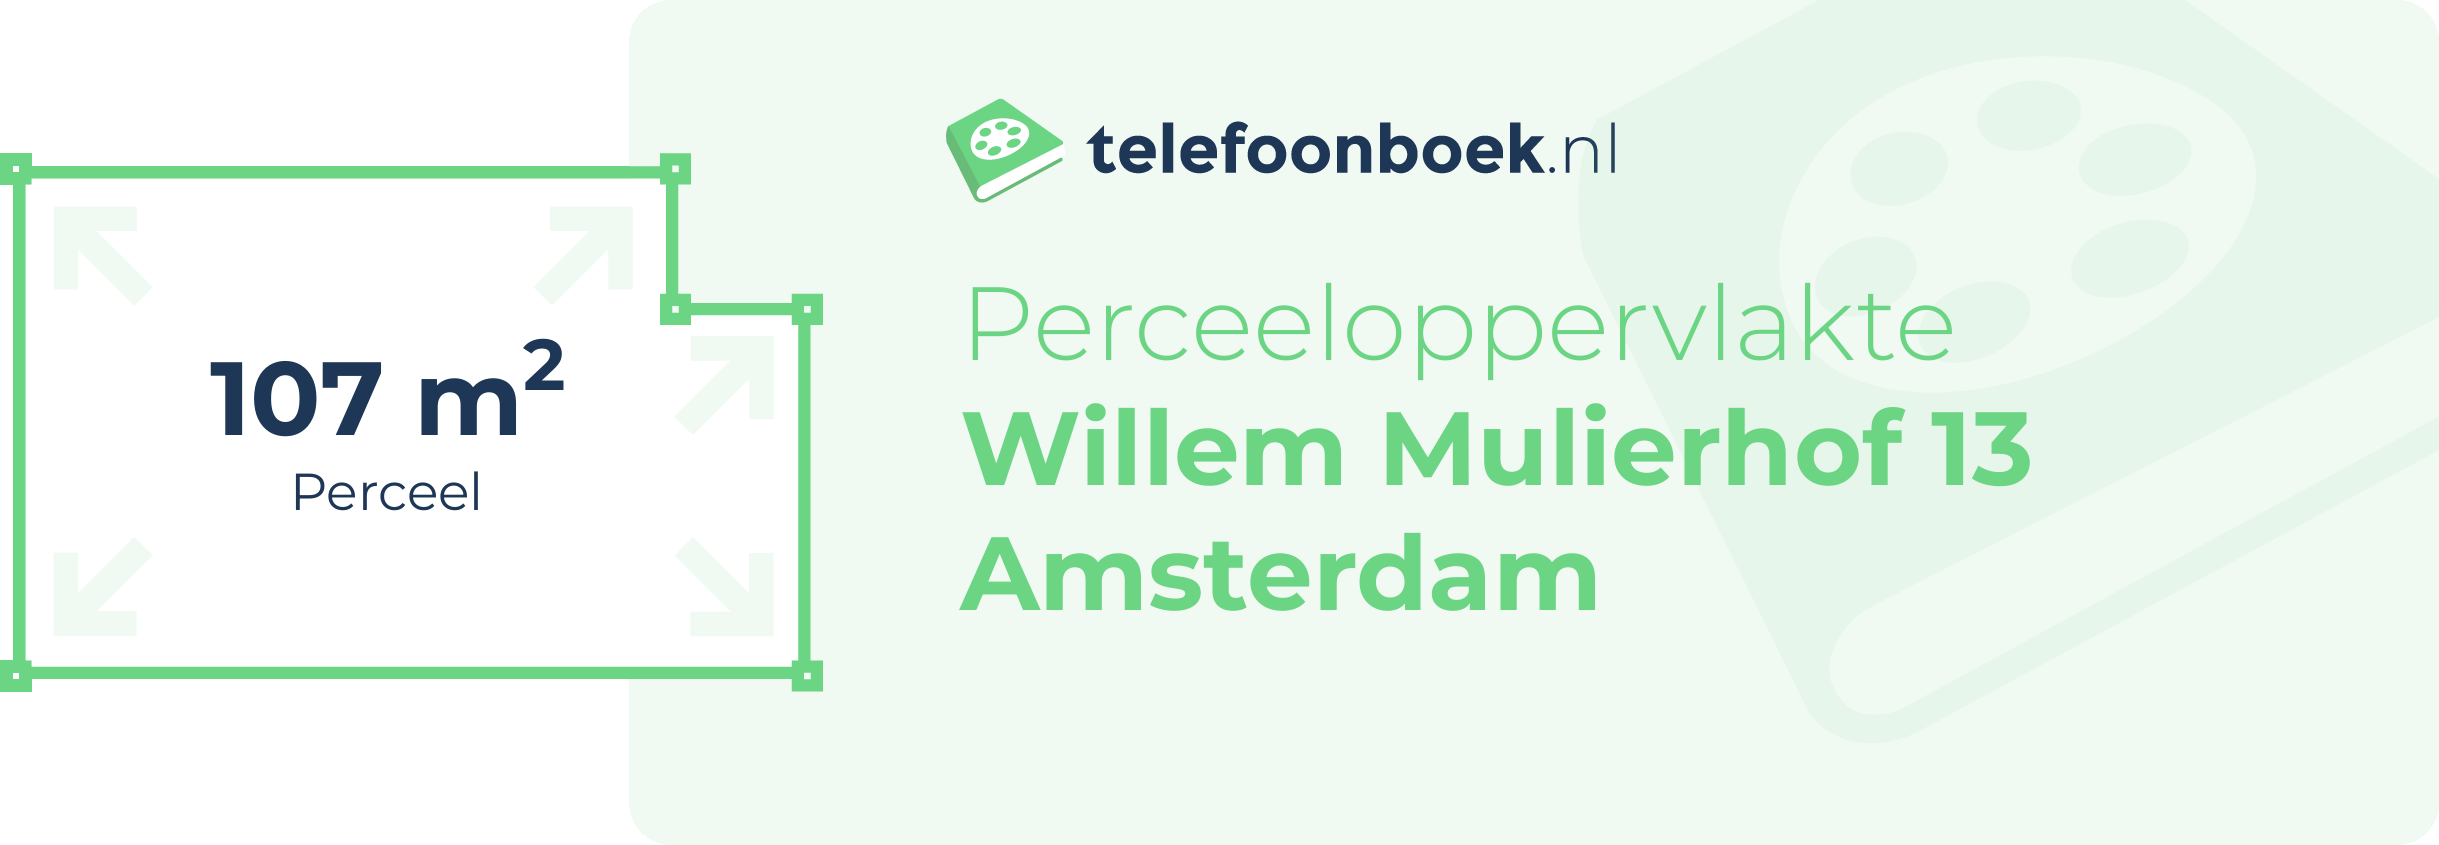 Perceeloppervlakte Willem Mulierhof 13 Amsterdam